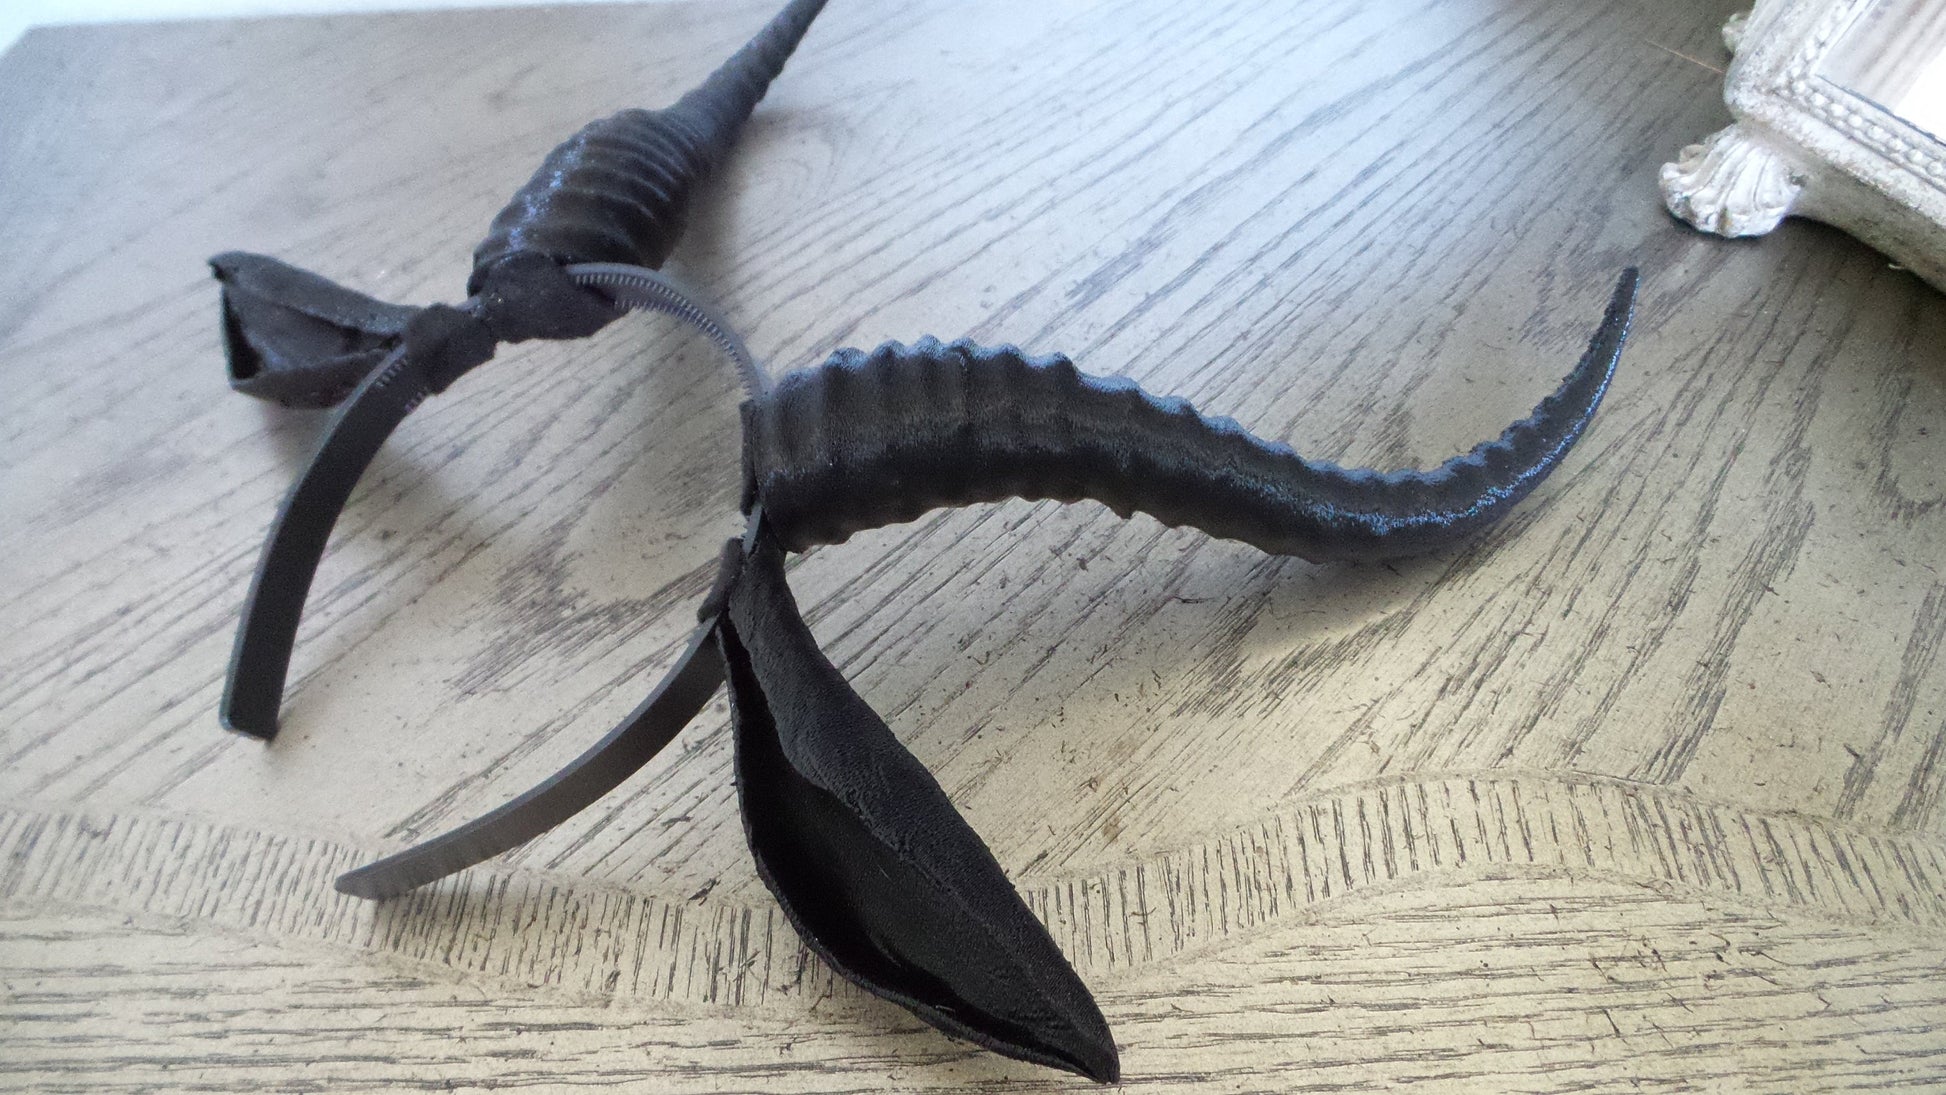 Gazelle horned headband with ears combo Elvish Larp headdress black animal horns 3D print - Mud And Majesty